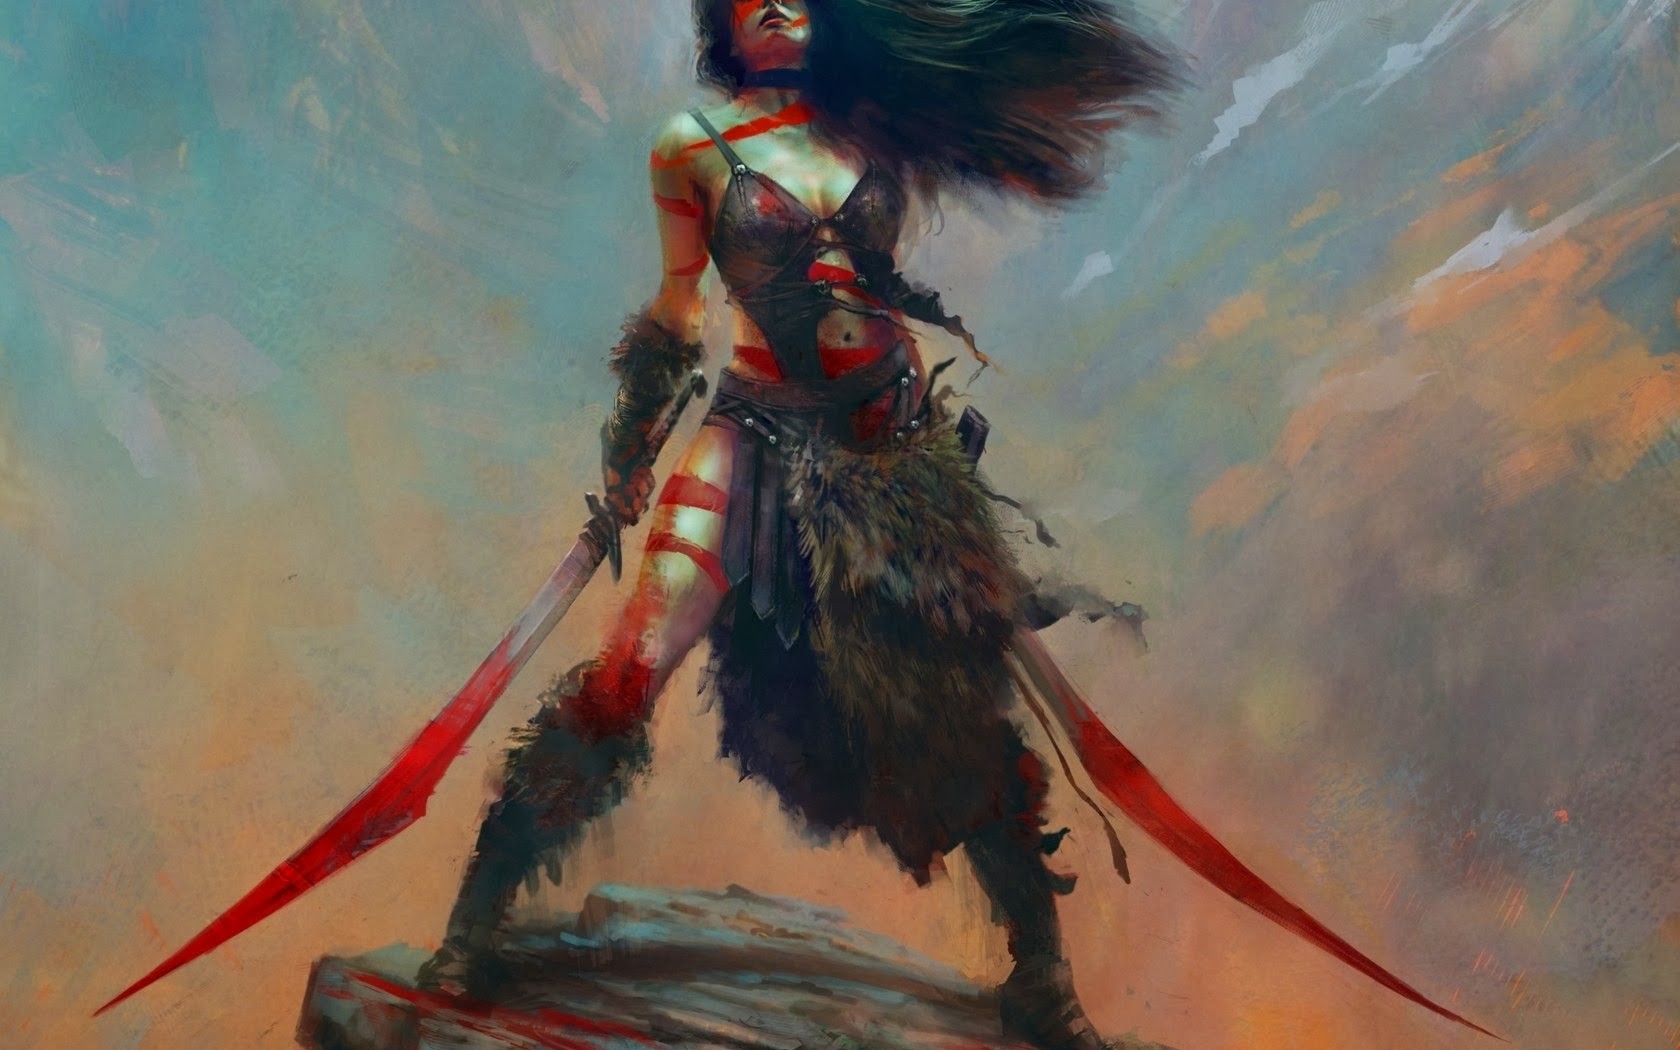 General 1680x1050 sword fantasy art fantasy girl women dark hair long hair women with swords standing Maciej Kuciara